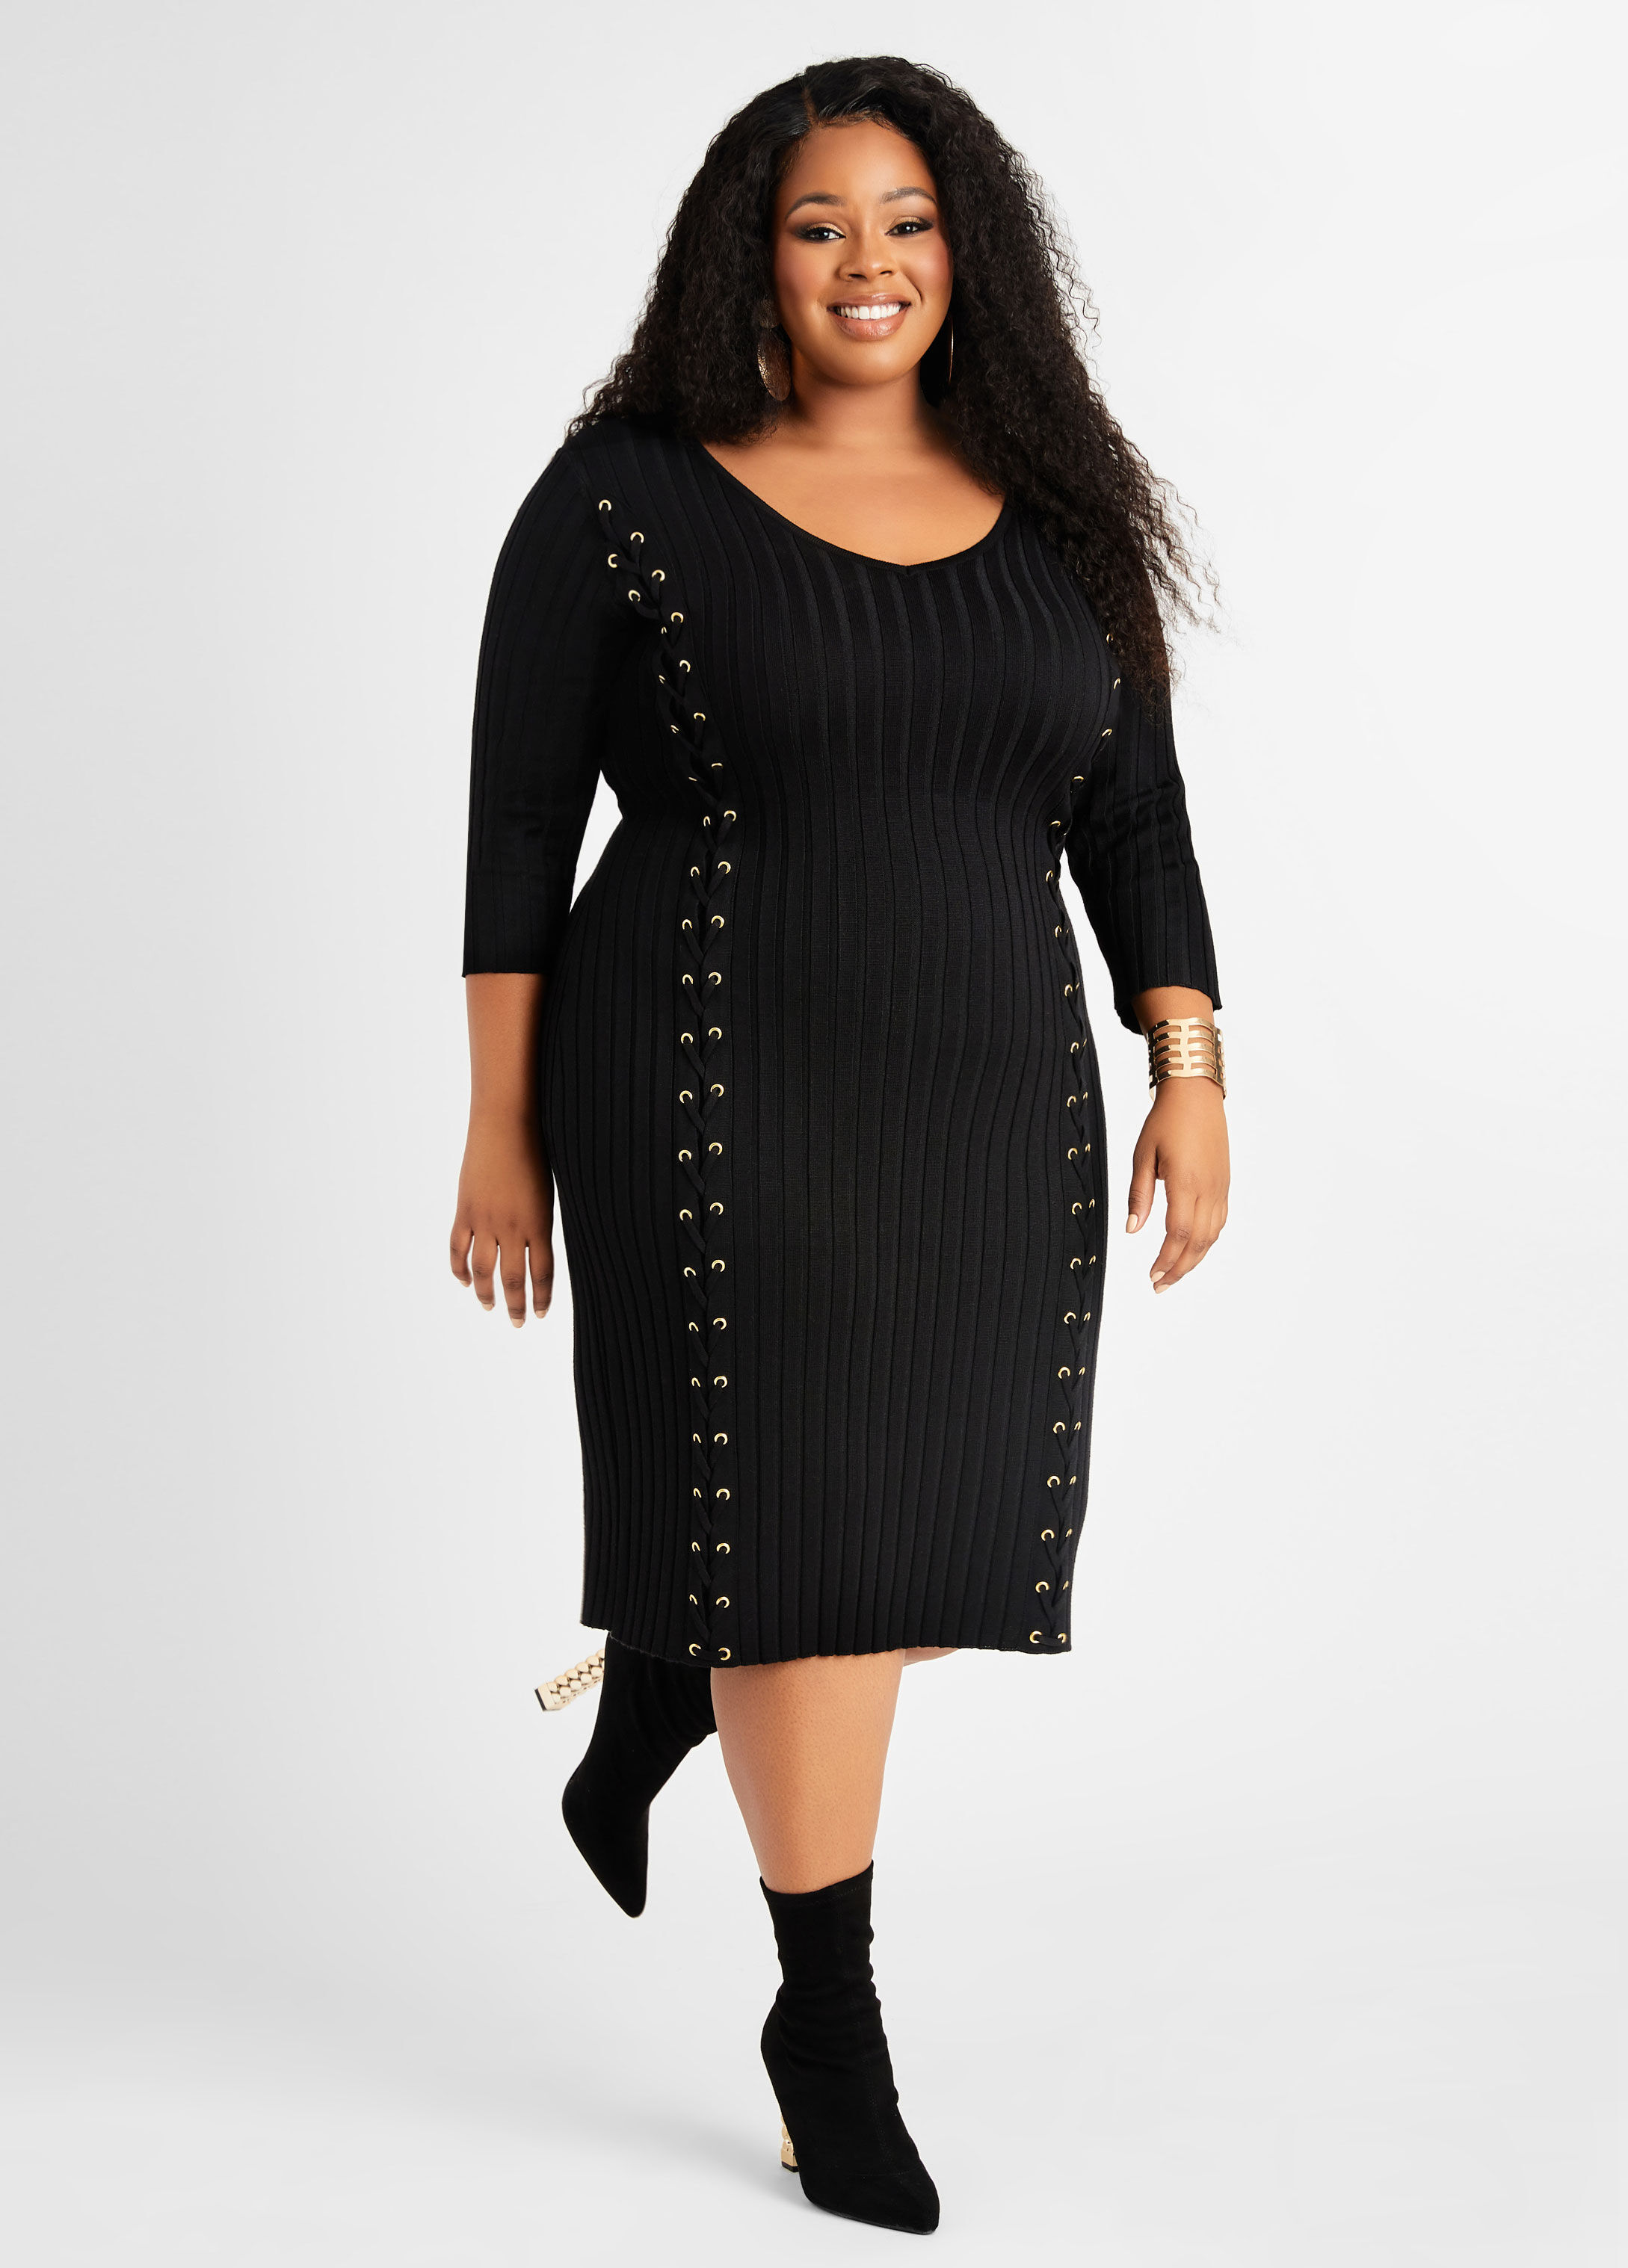 New Plus Size Dresses, Sizes 10 - 36 | Ashley Stewart